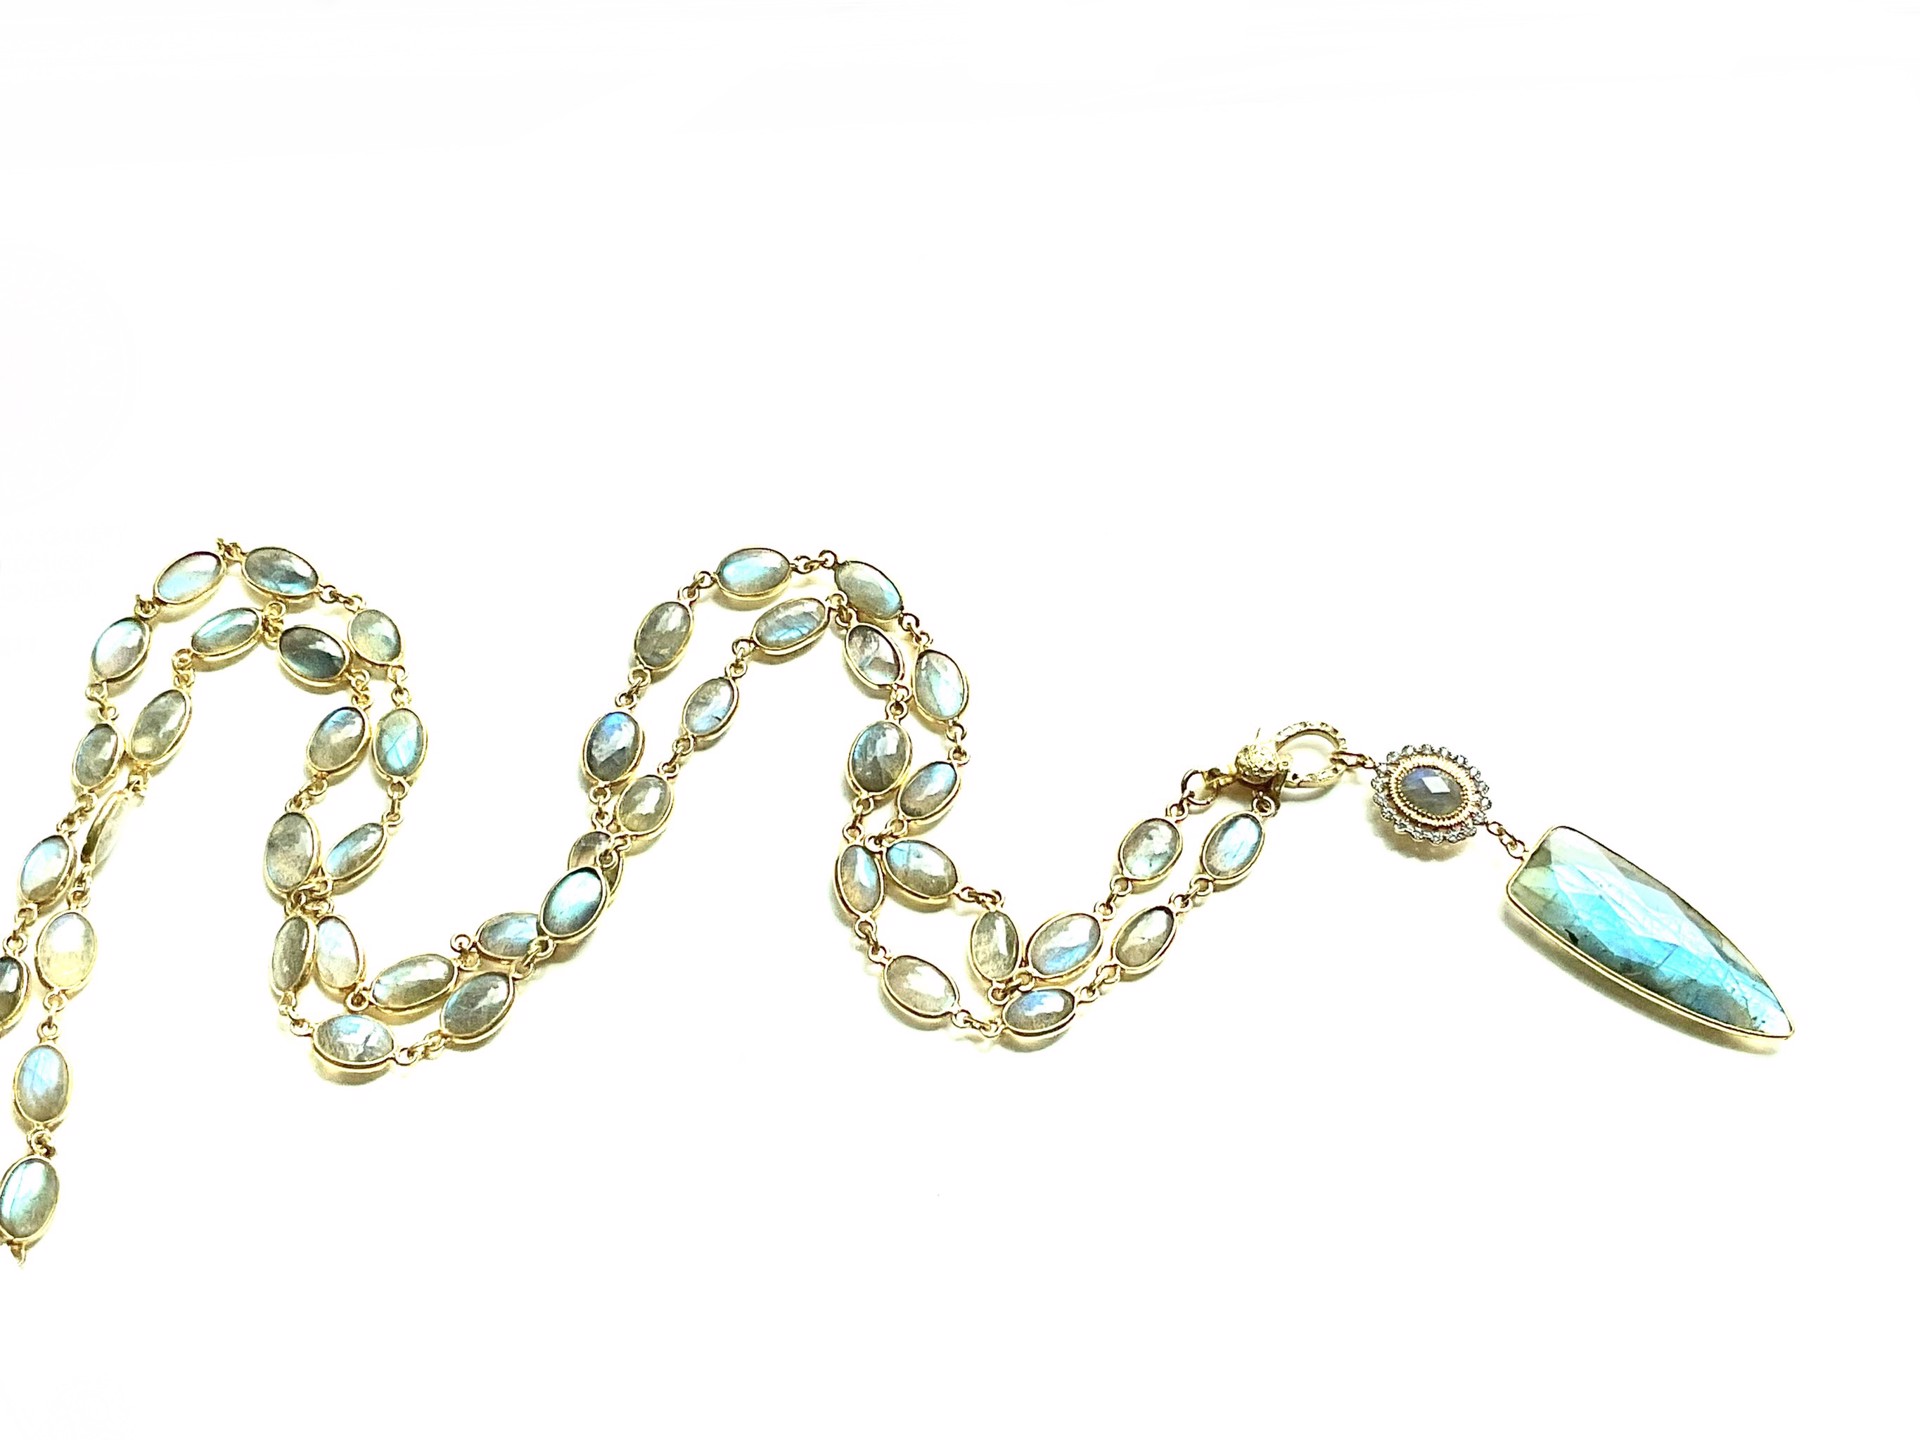 MLJA8510E Labradorite/WhtTpz Pendant wDiamonds on Chain of Bezel-set Smooth Labradorite Ovals by Melinda Lawton Jewelry